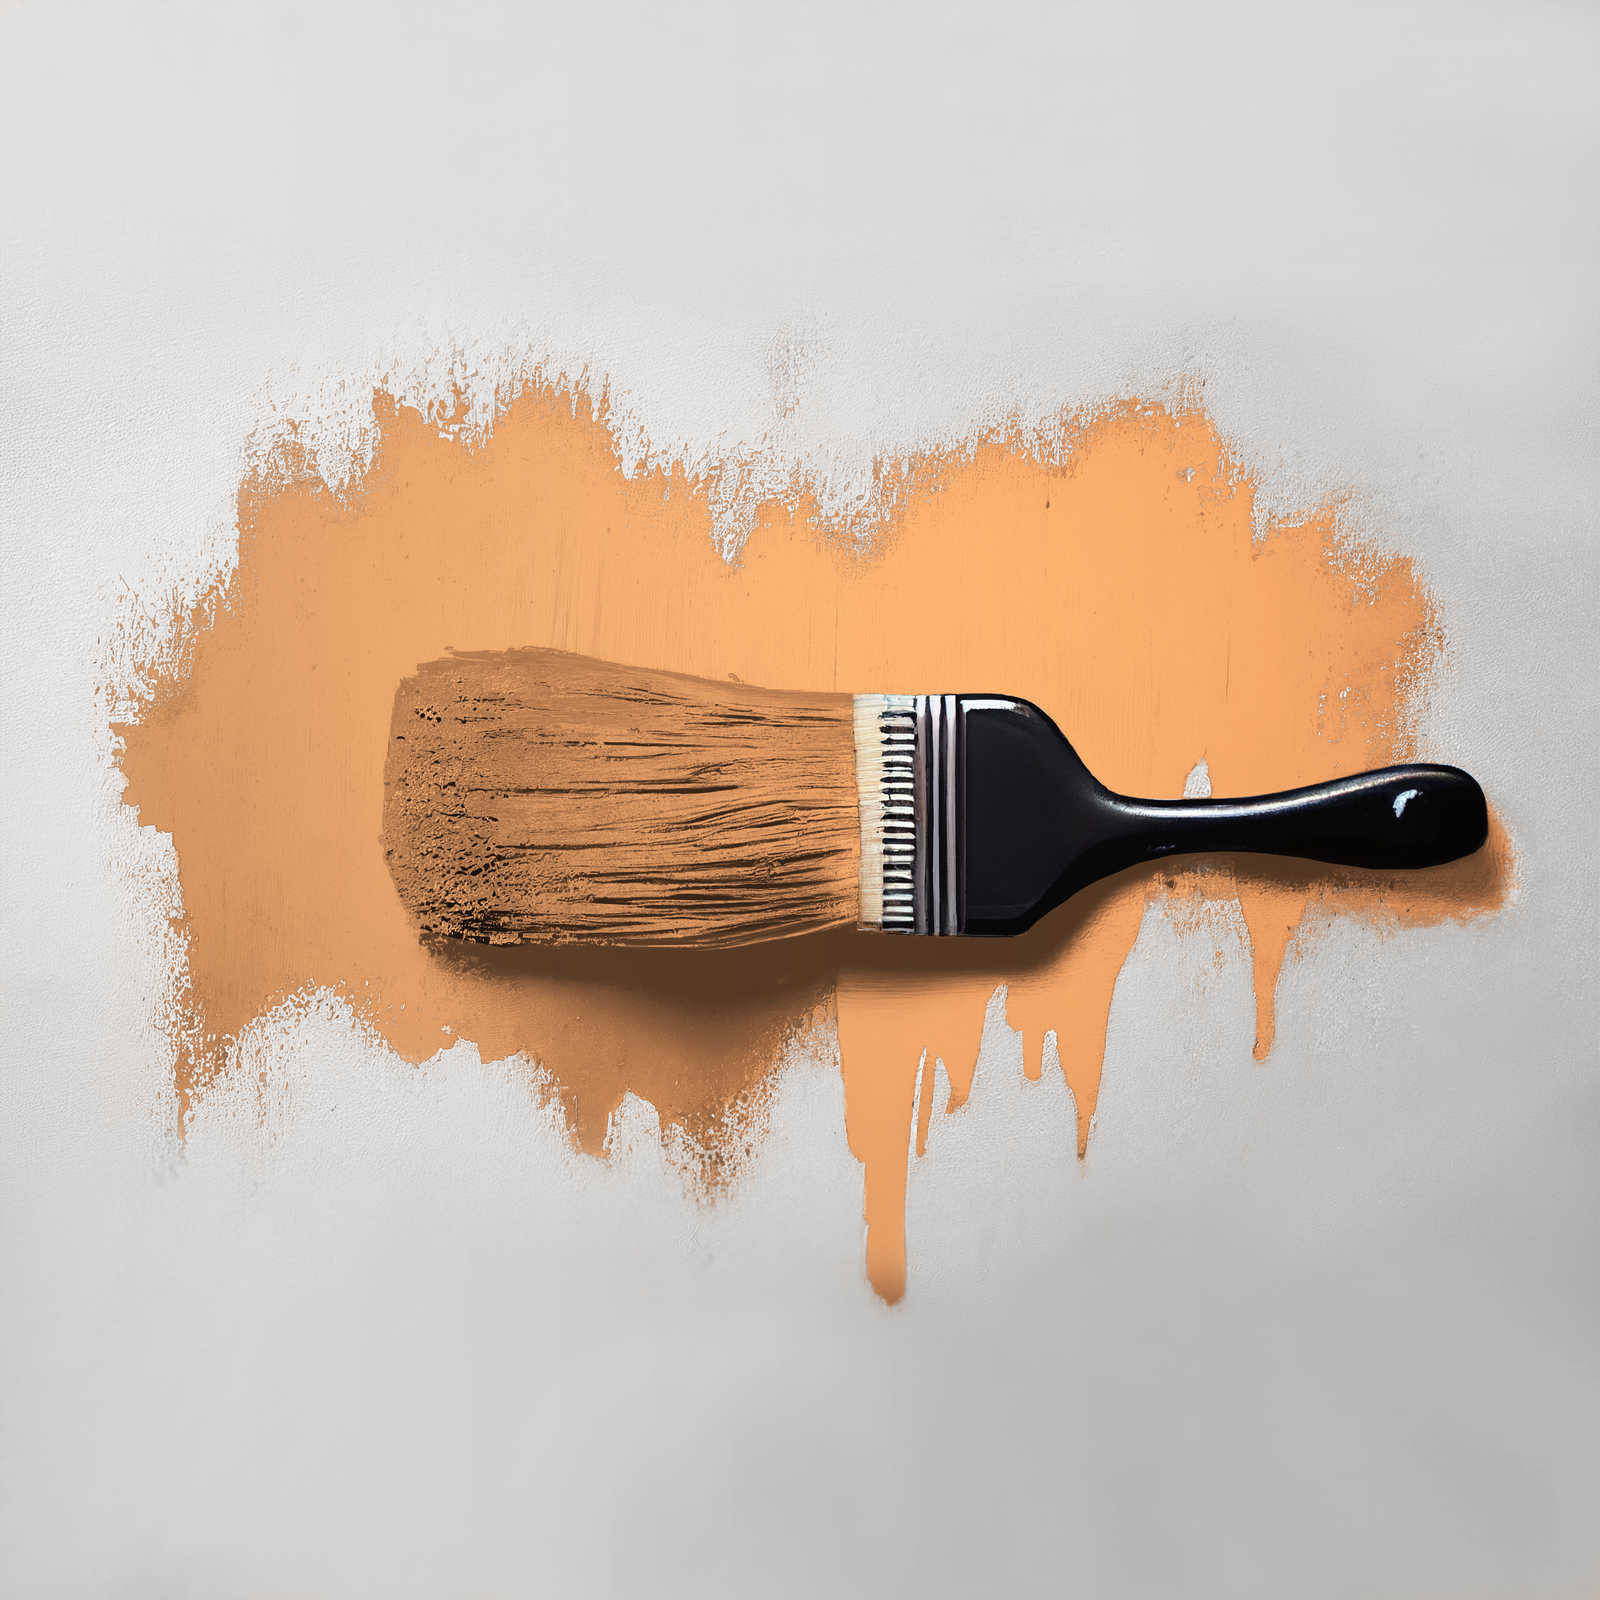             Pittura murale TCK5010 »Pure Papaya« in arancione brillante – 2,5 litri
        